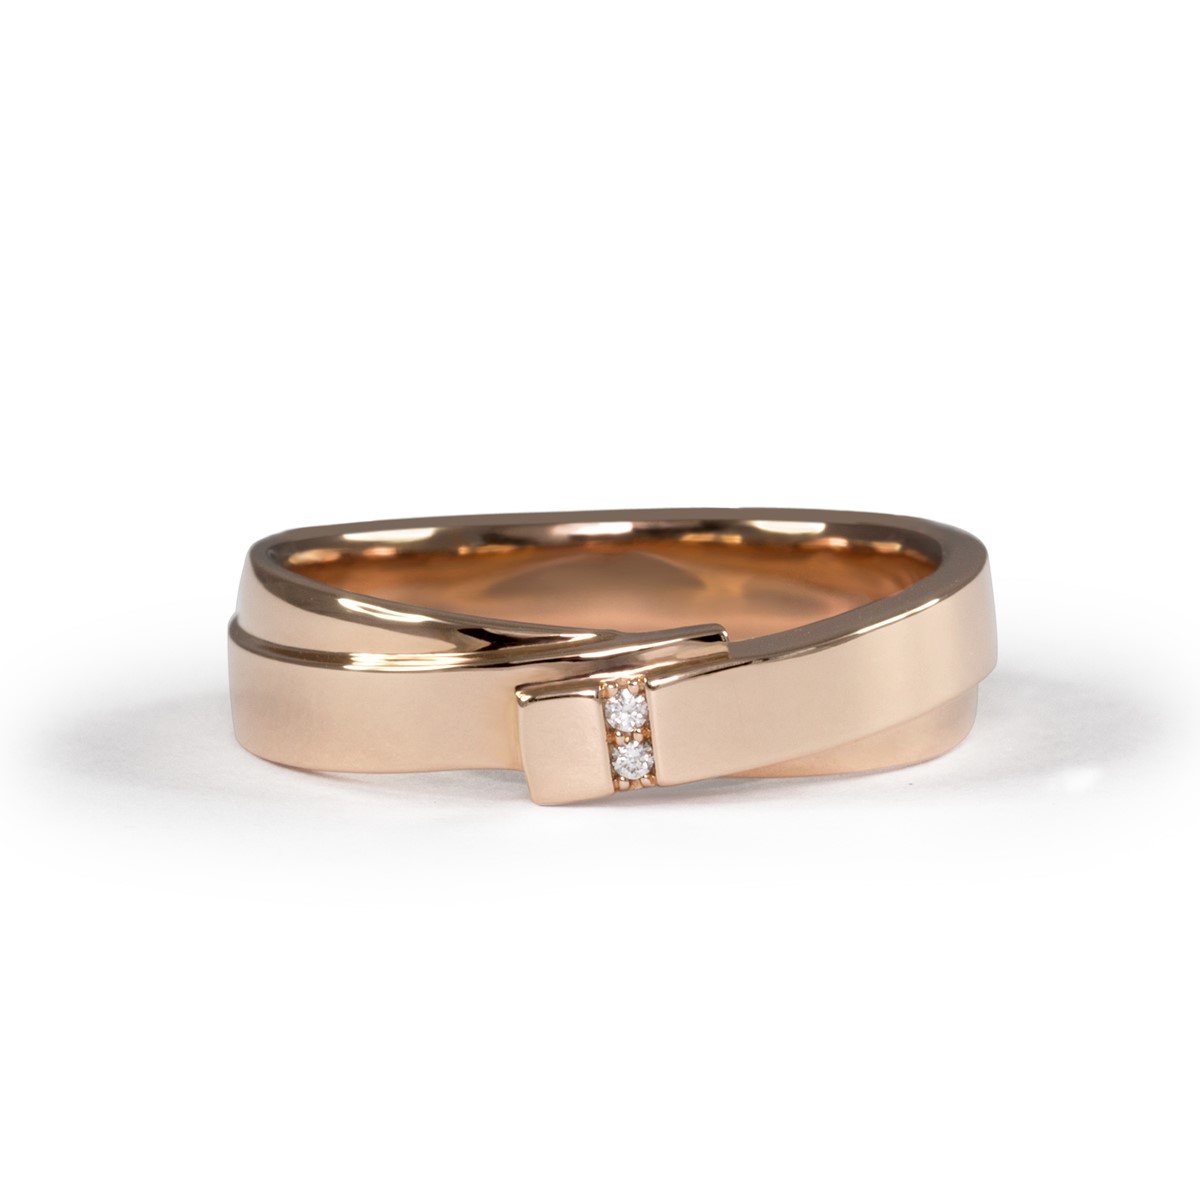 LAVERA Diamond - Pink Gold Wedding Band  แหวนคู่/แหวนแต่งงาน ทองชมพู